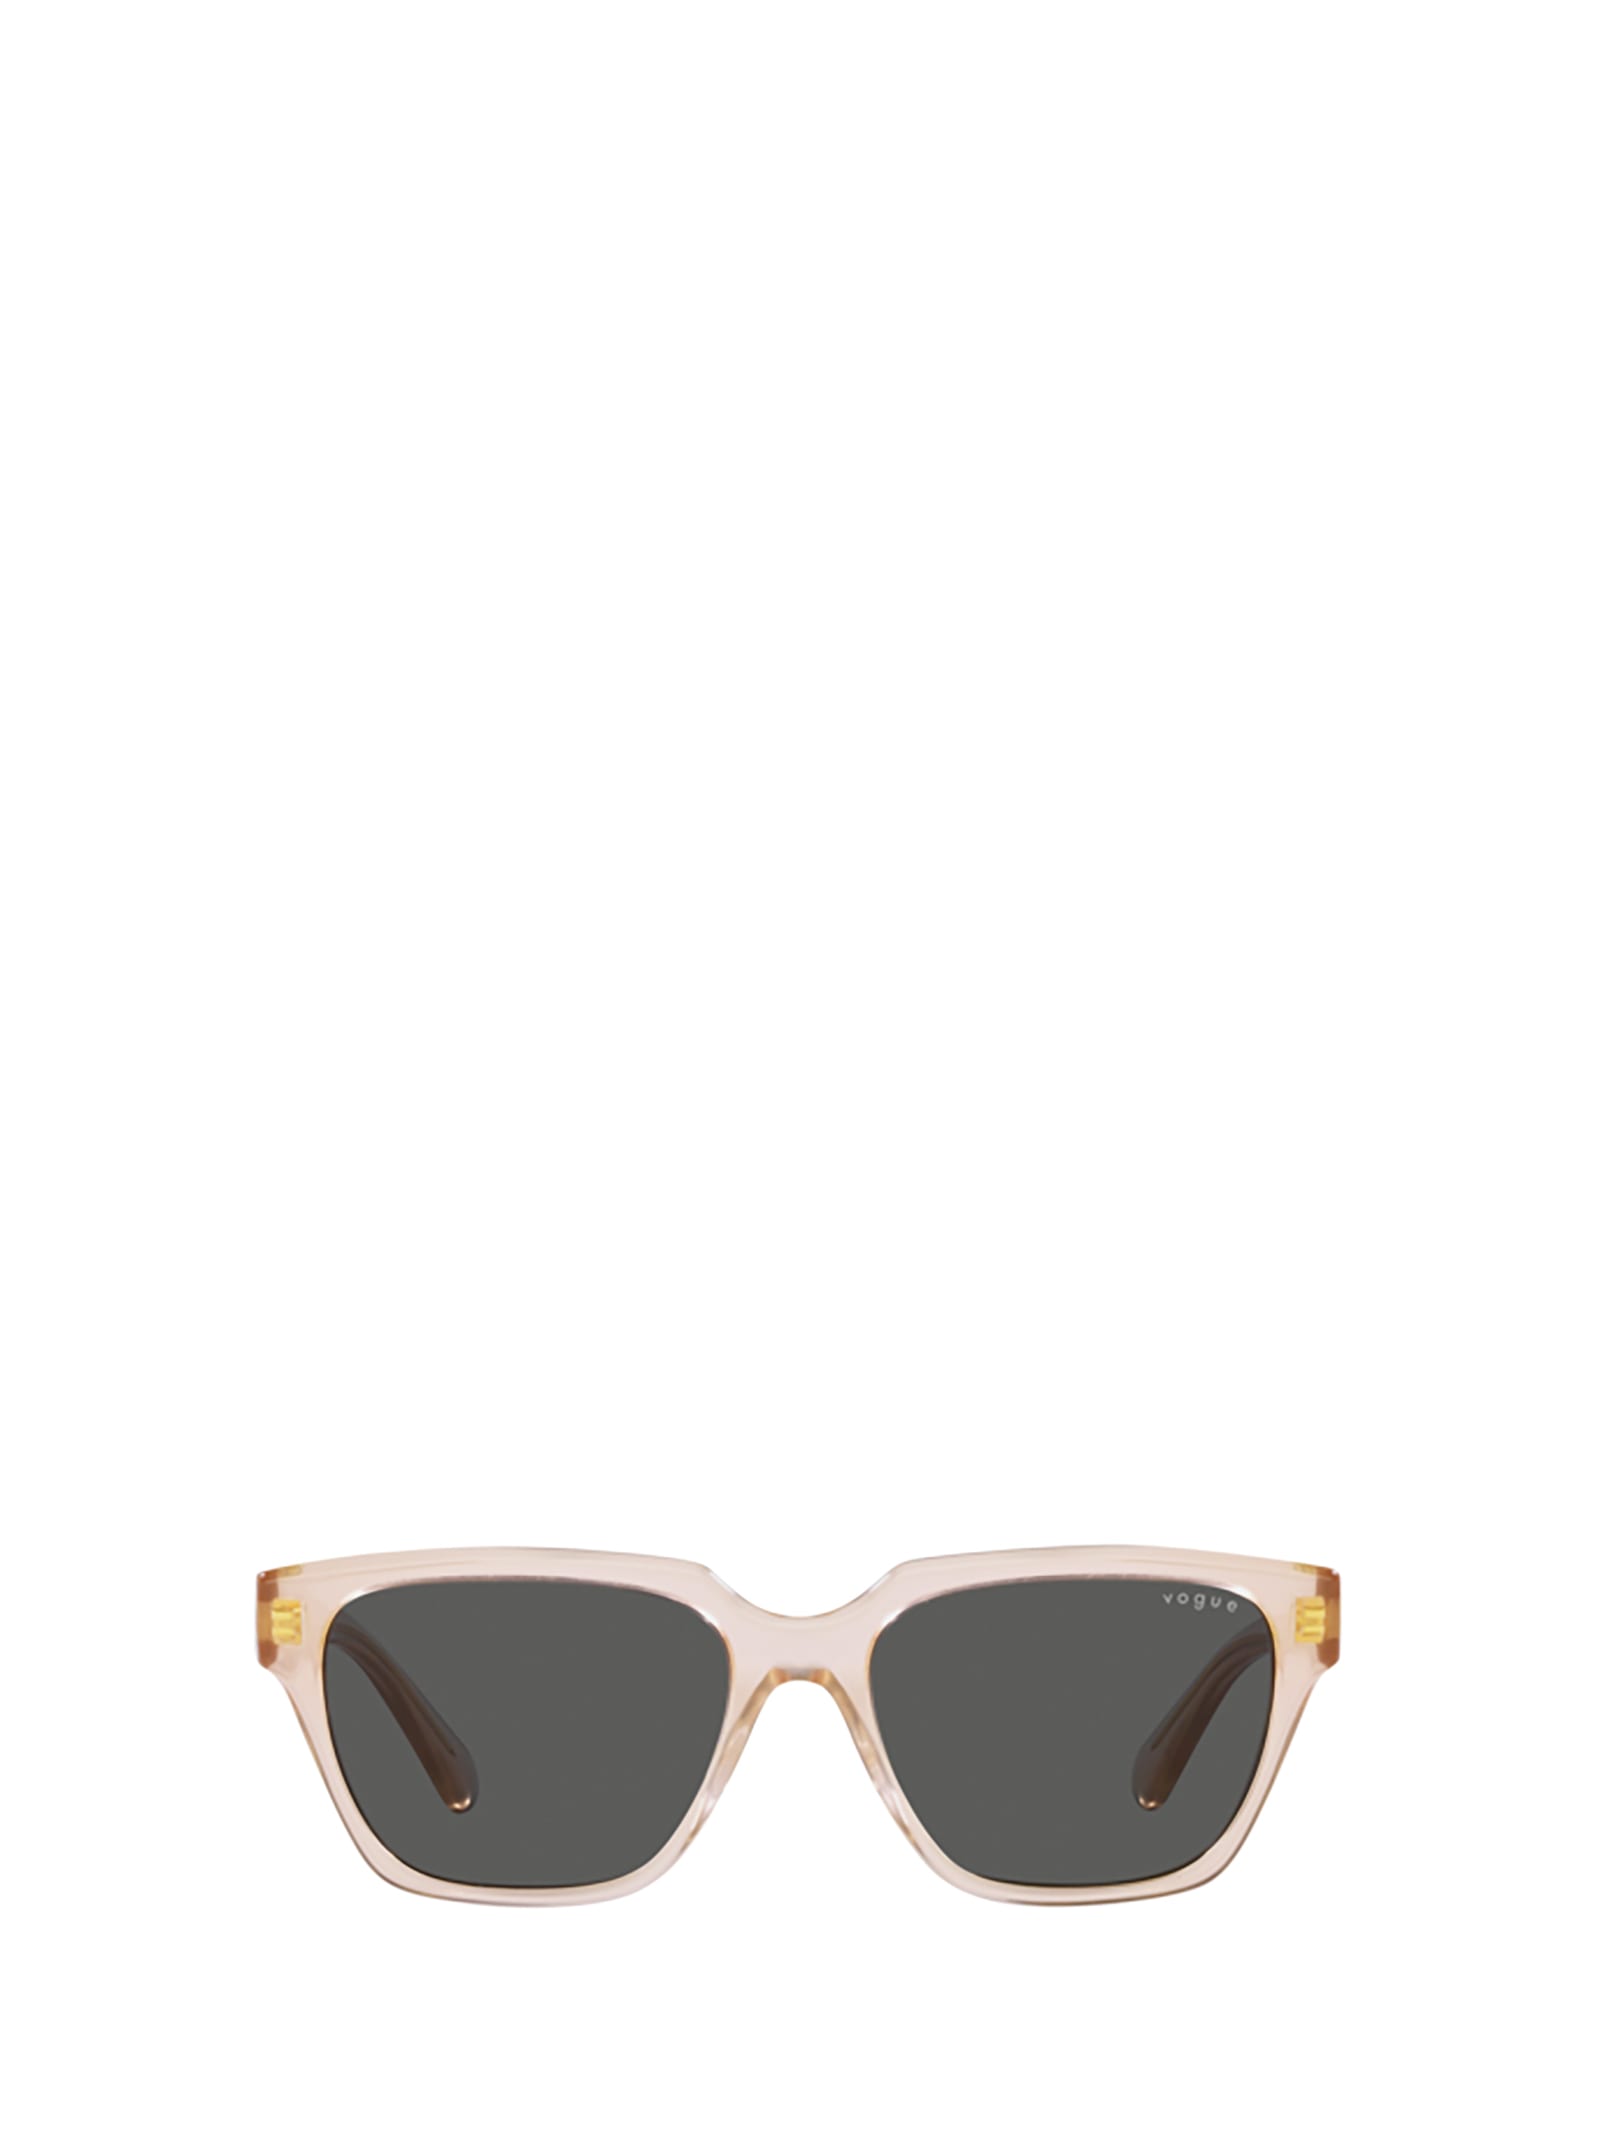 Vogue Eyewear VO5512S Sunglasses